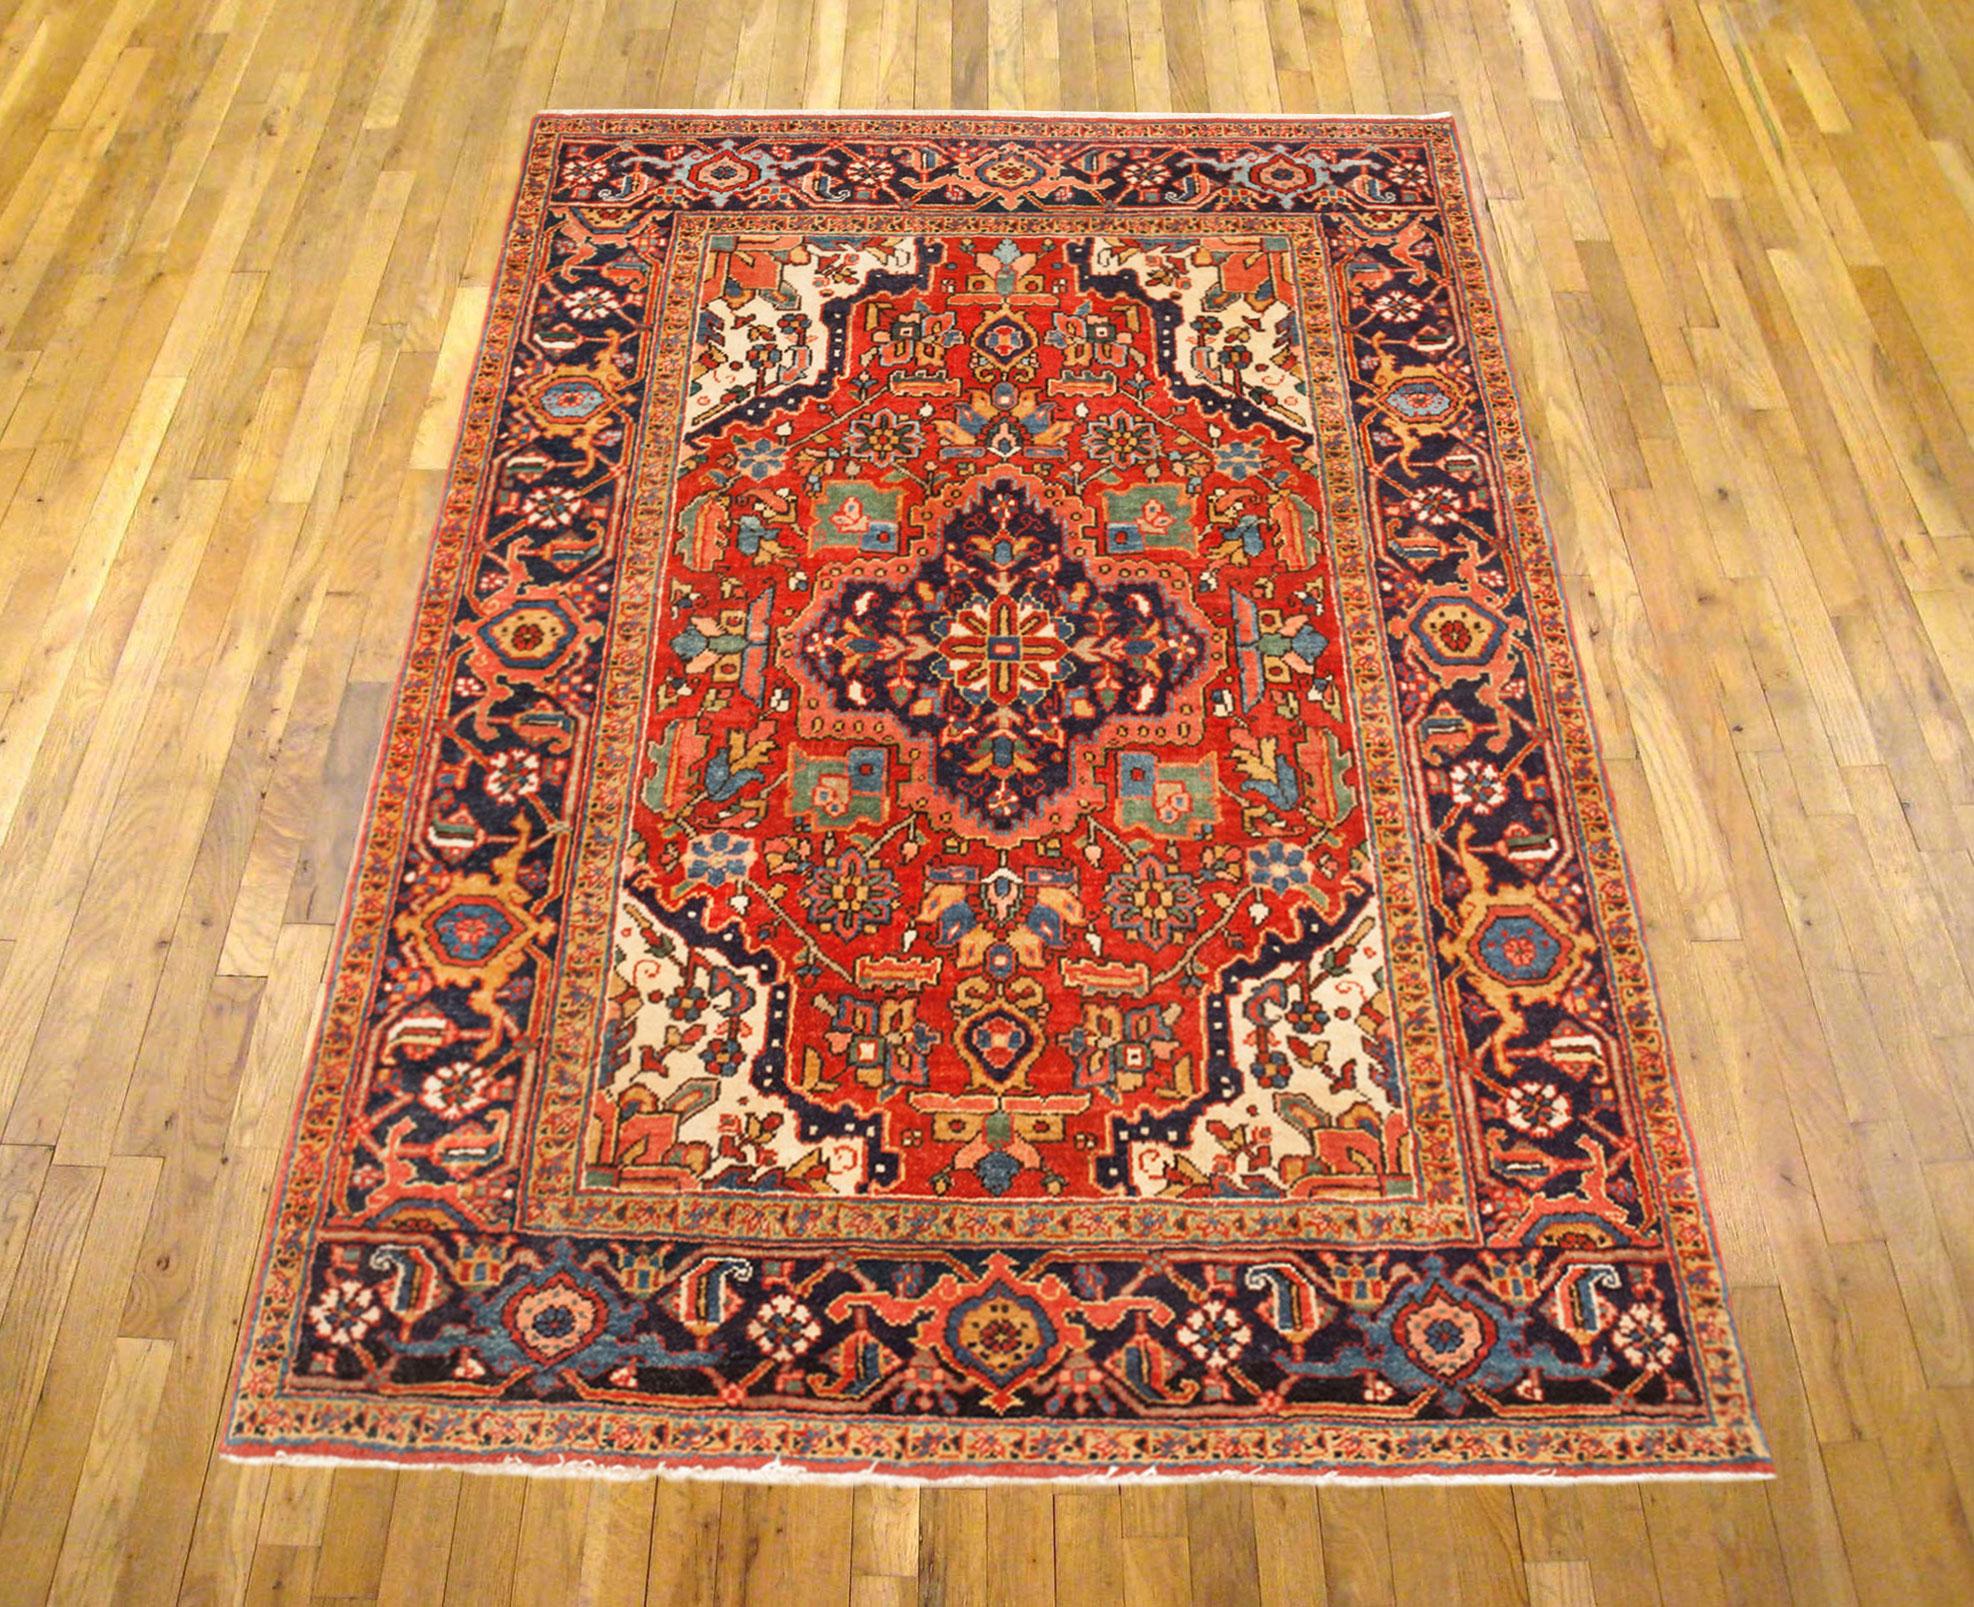 Vintage Persian Heriz Oriental rug, Small size

A vintage Persian Heriz oriental rug, size 5'8